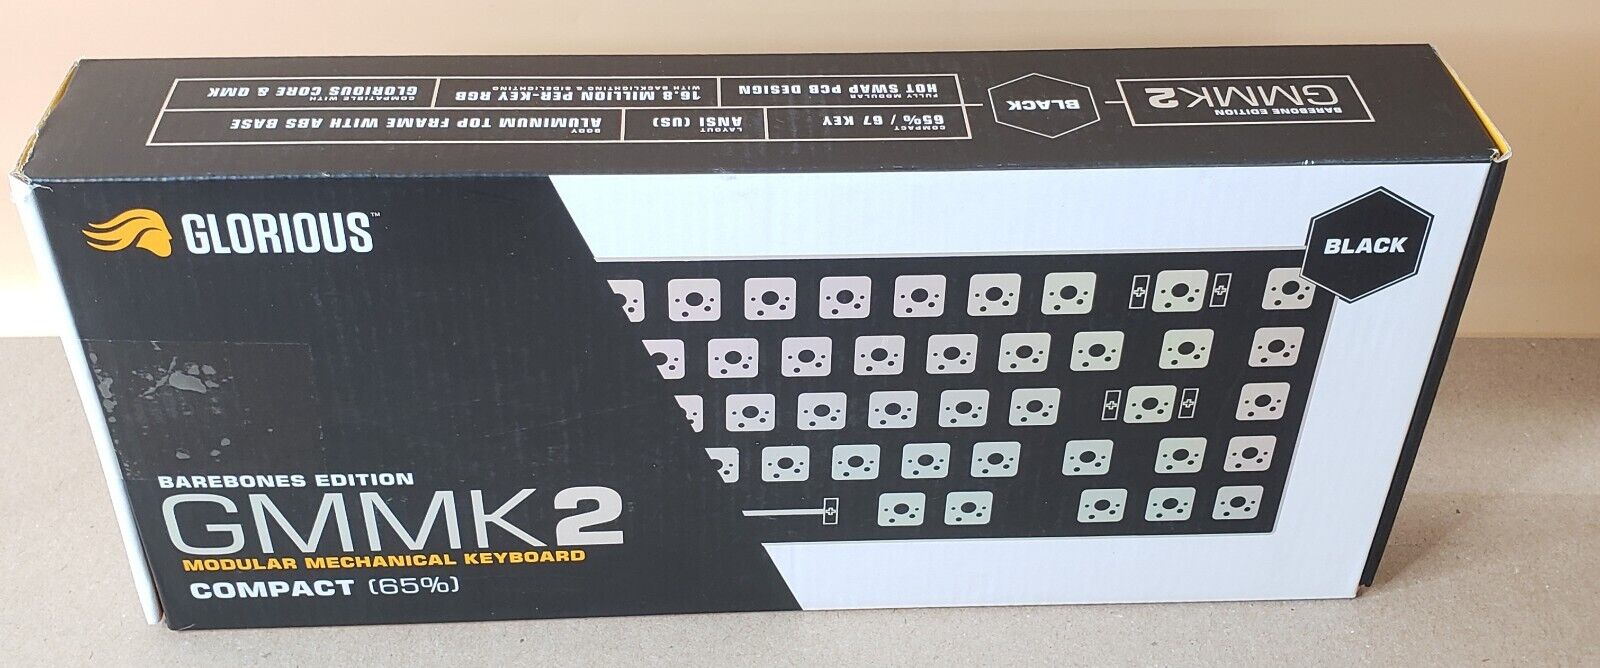 Glorious GMMK2 RGB Compact Mechanical 65% Gaming Keyboard - Black Sealed